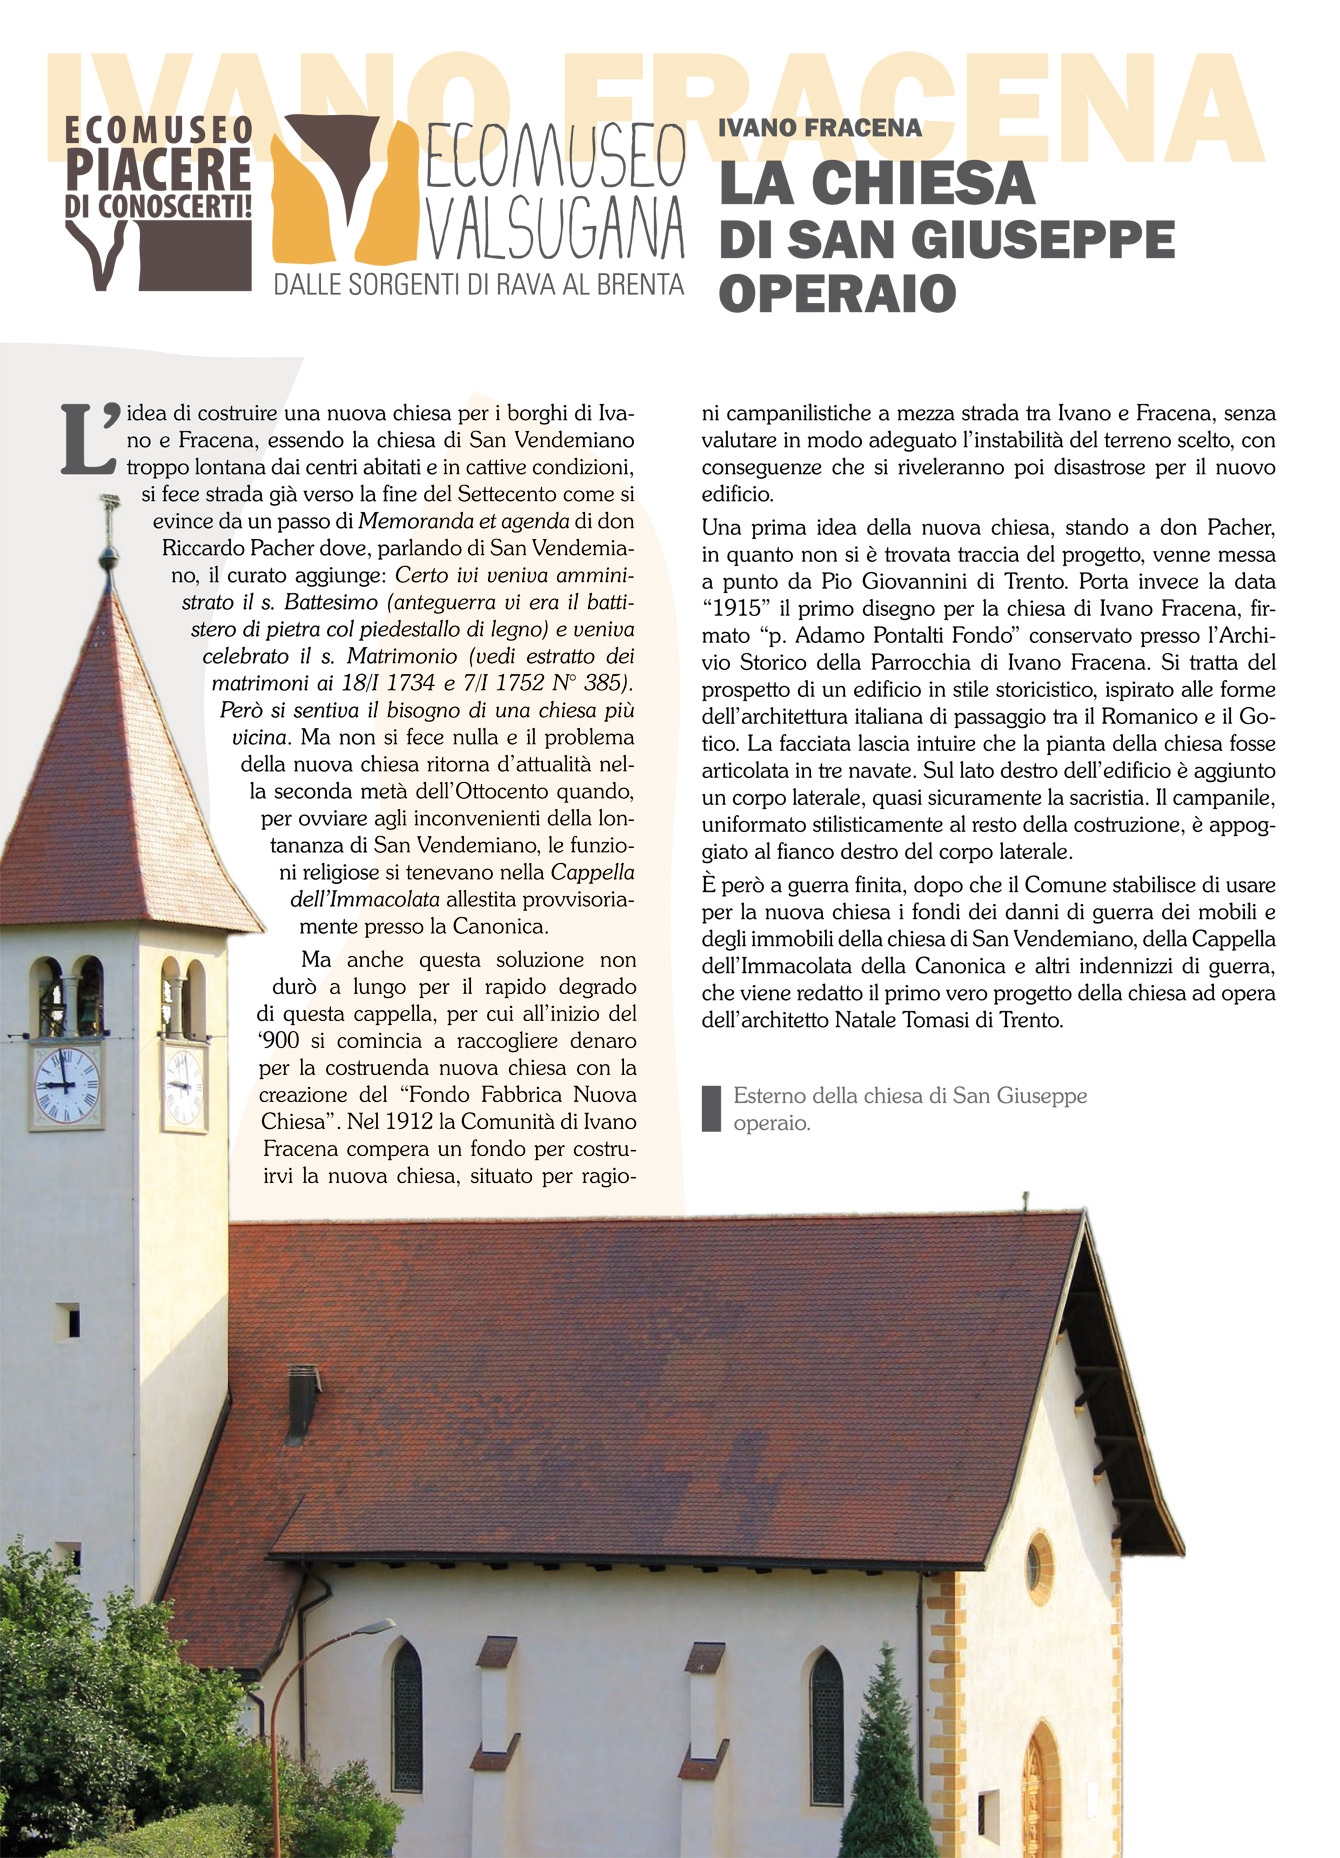 Ivano Fracena: la chiesa di San Giuseppe operaio